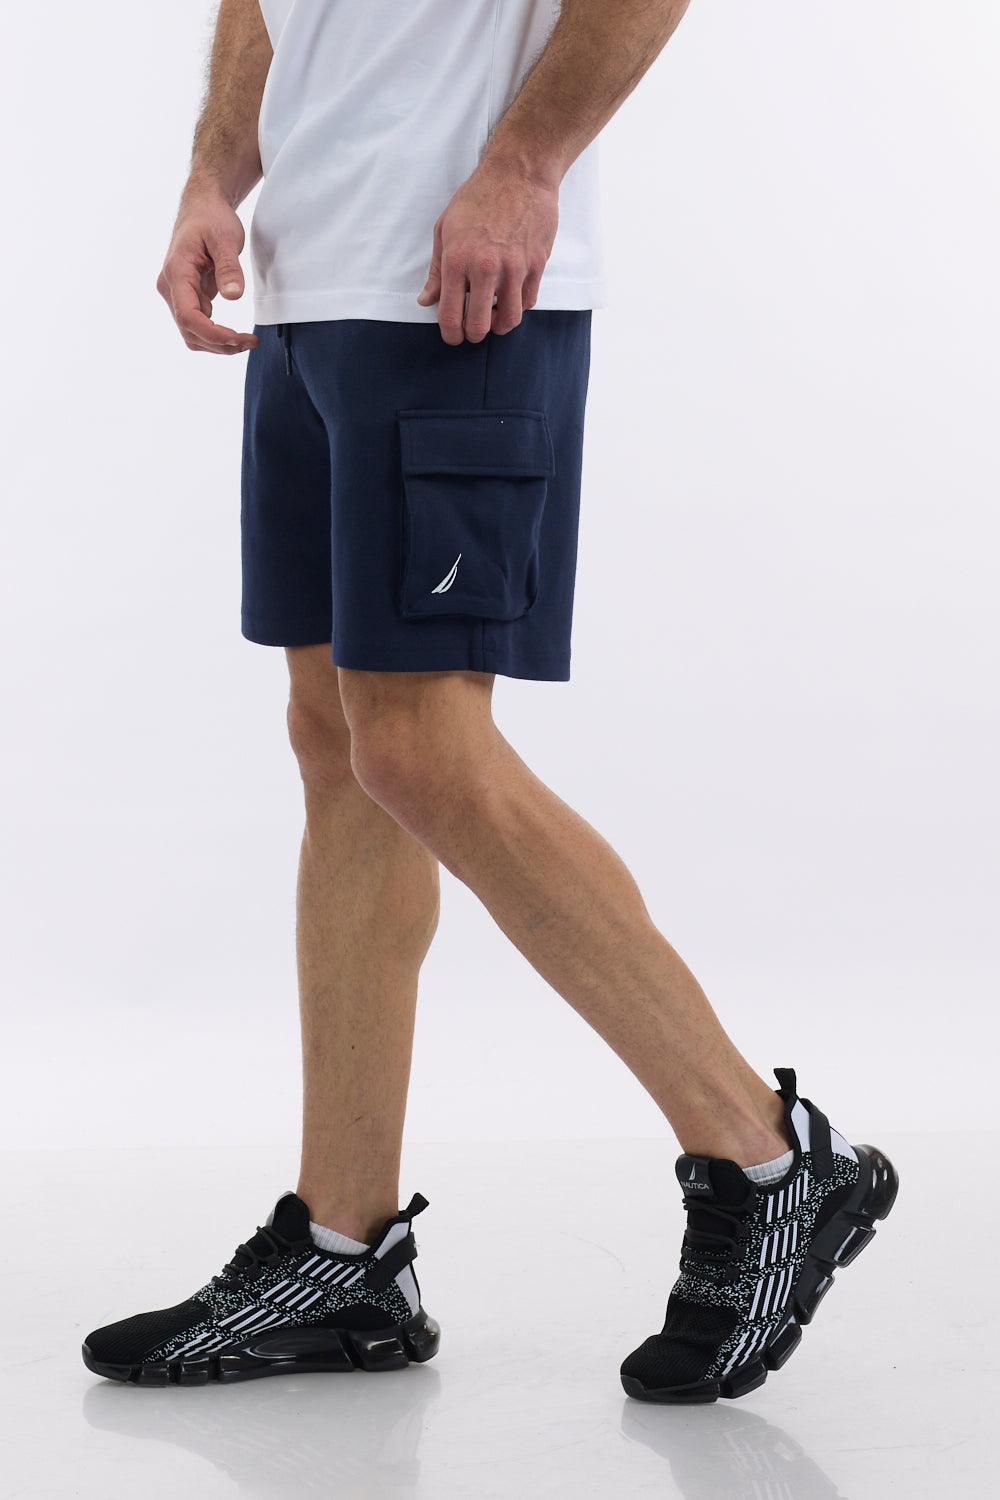 NAUTICA - מכנסיים קצרים בסגנון ”סיילור” בצבע נייבי - MASHBIR//365